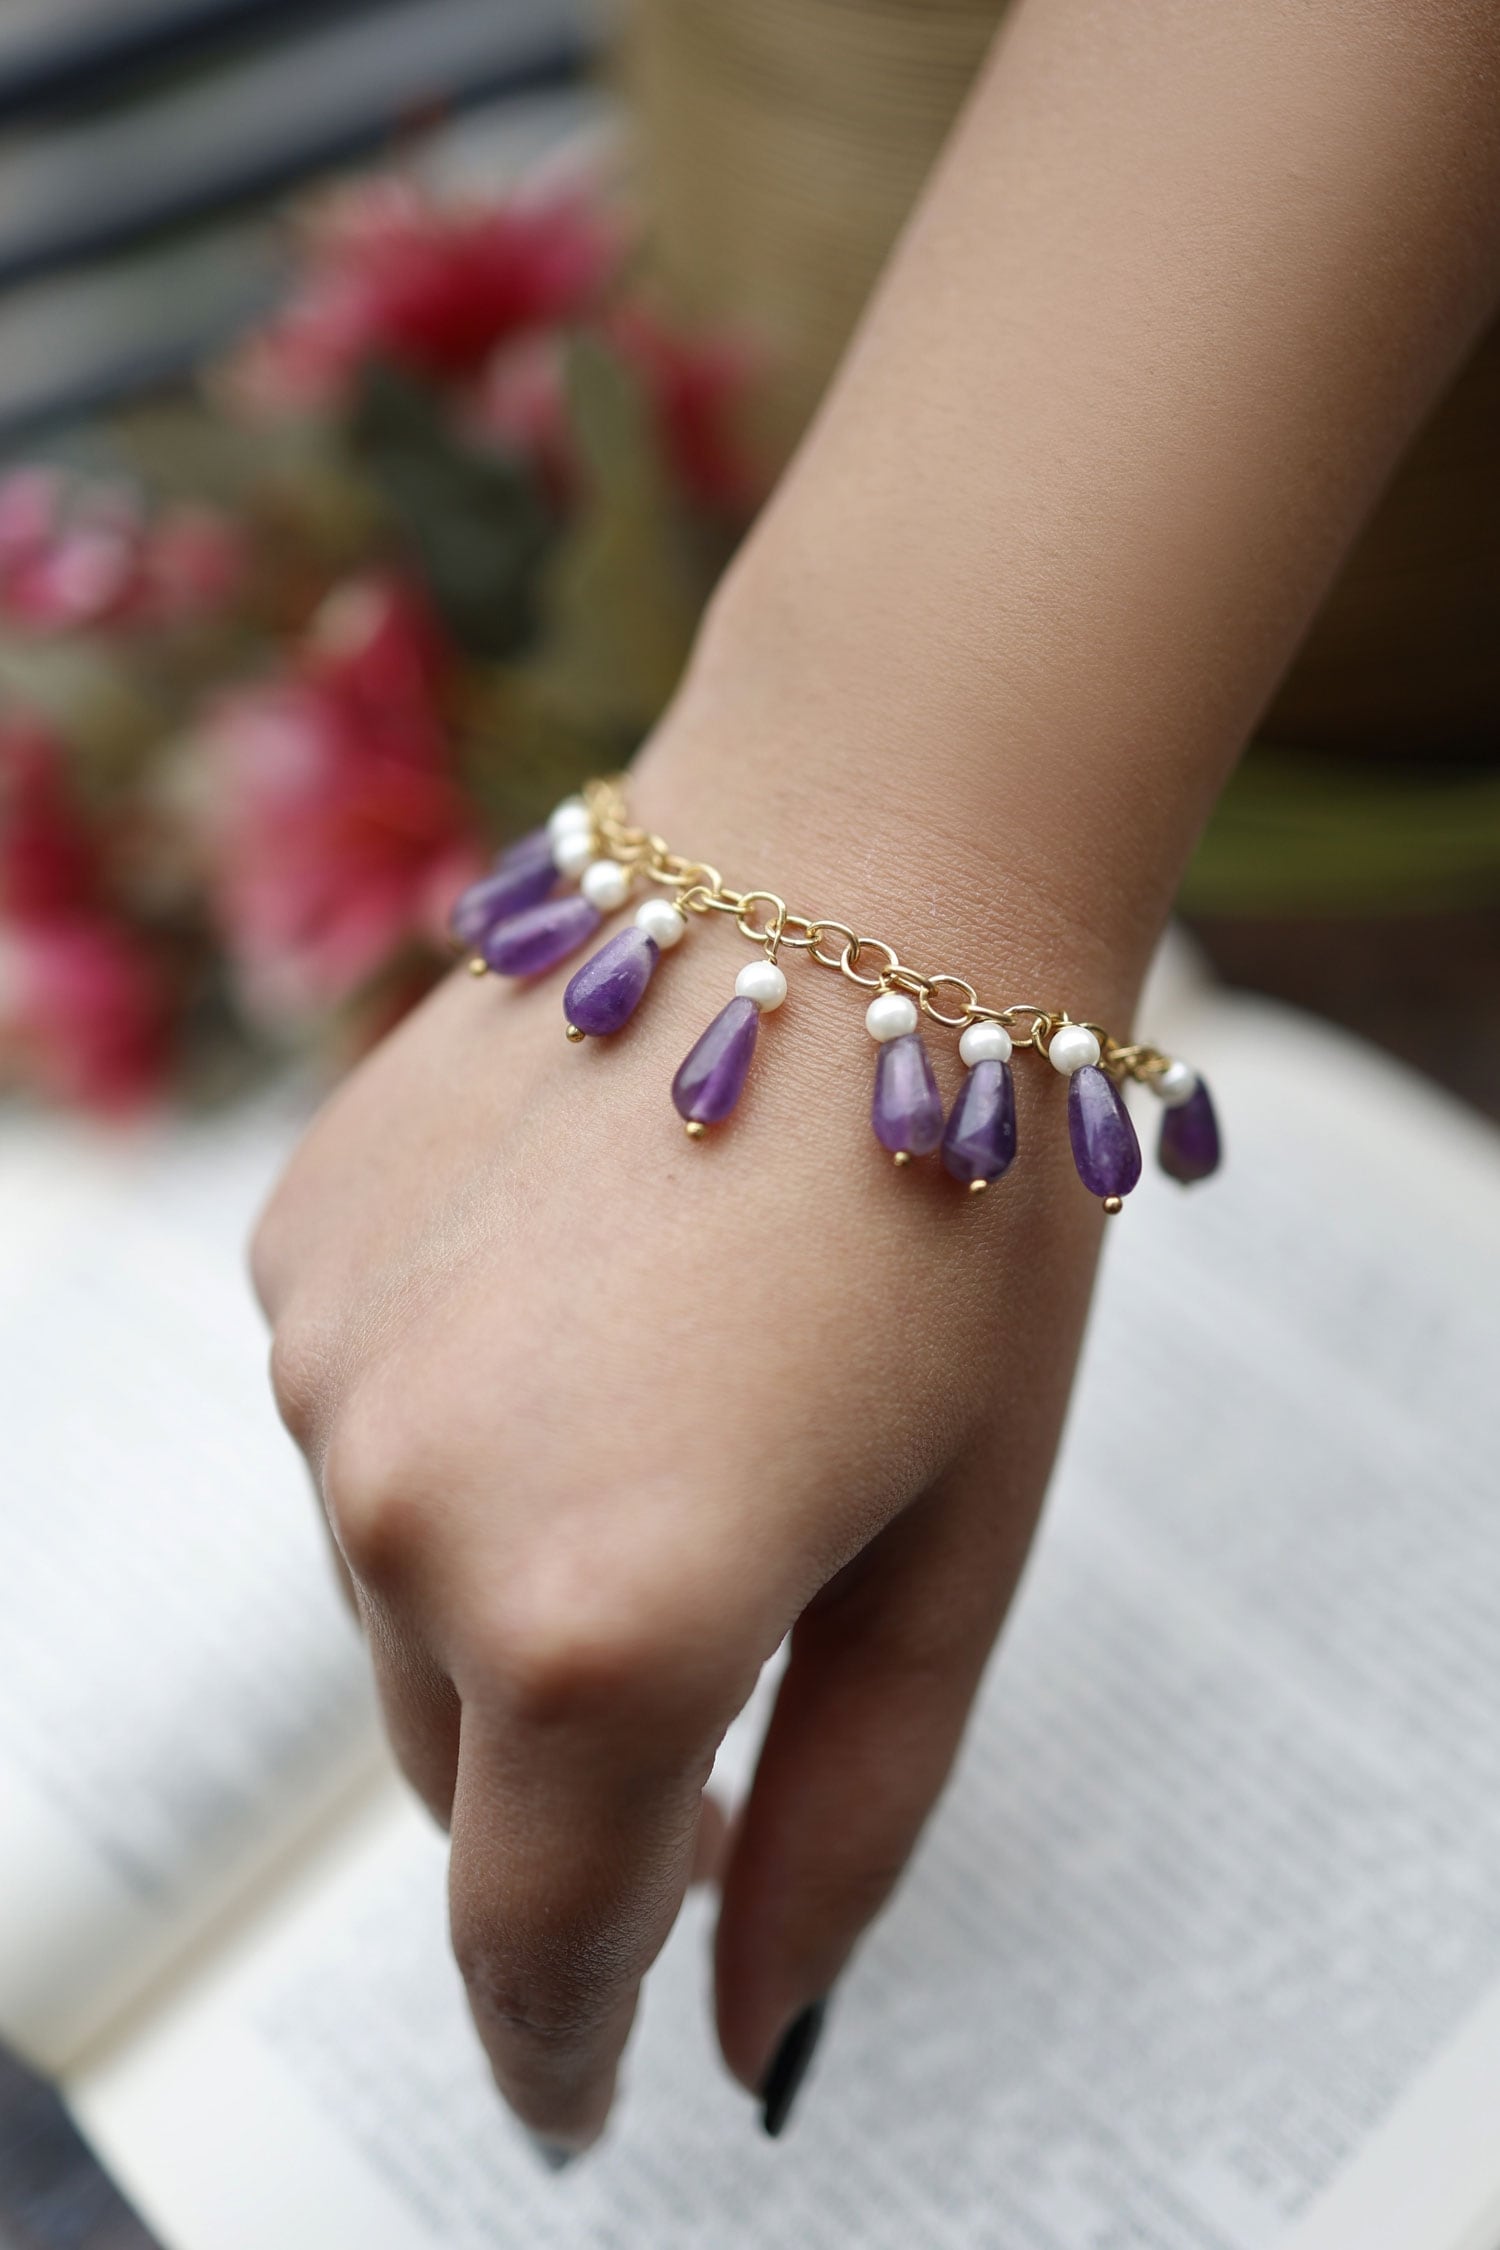 Buy Amethyst Bracelet, Stretch Bracelet, Crystal Bracelet, Authentic  Natural Amethyst Beaded Bracelet Online in India - Etsy